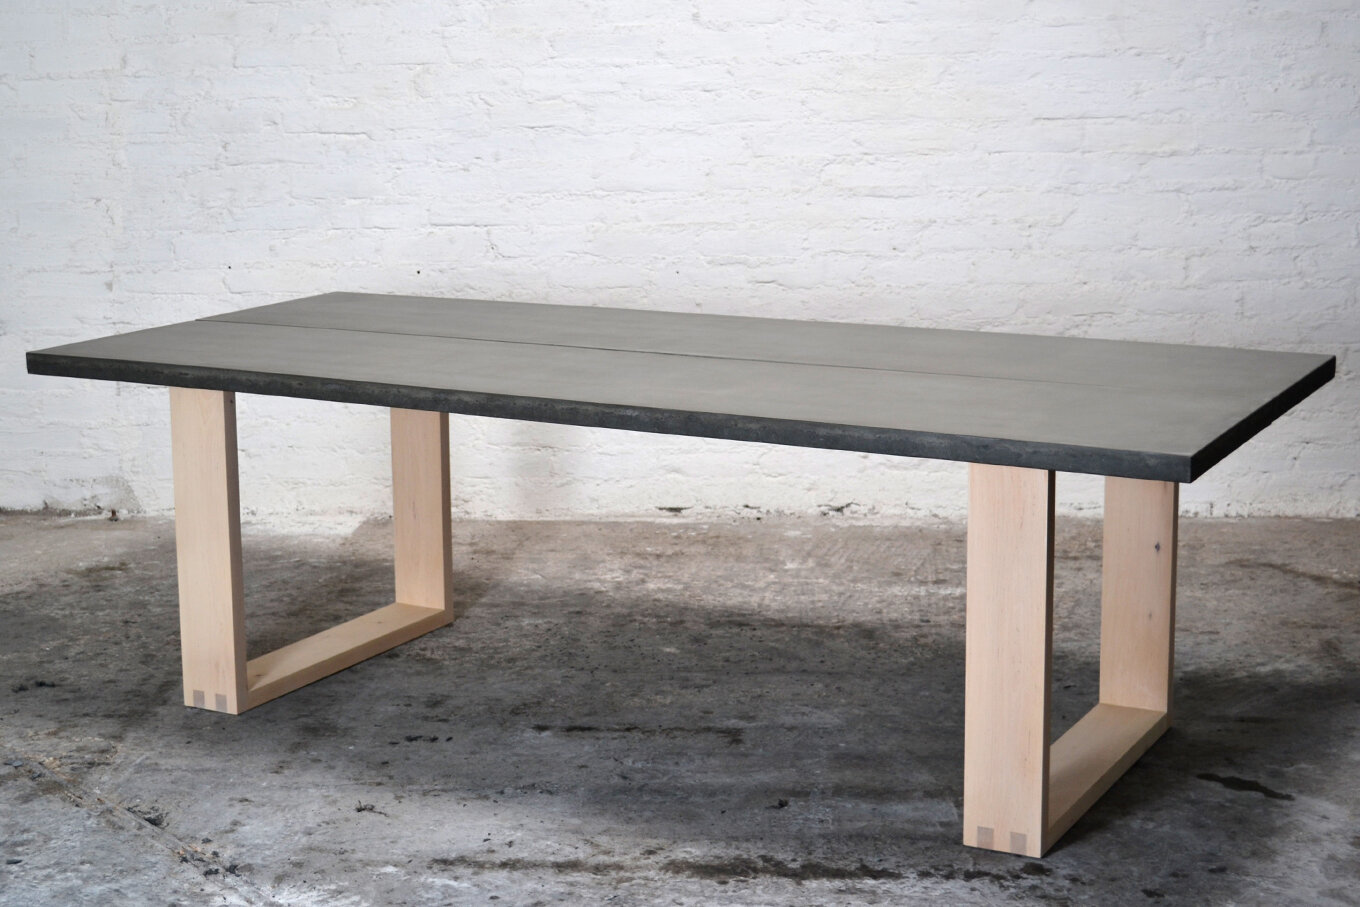 Koivu concrete dining table